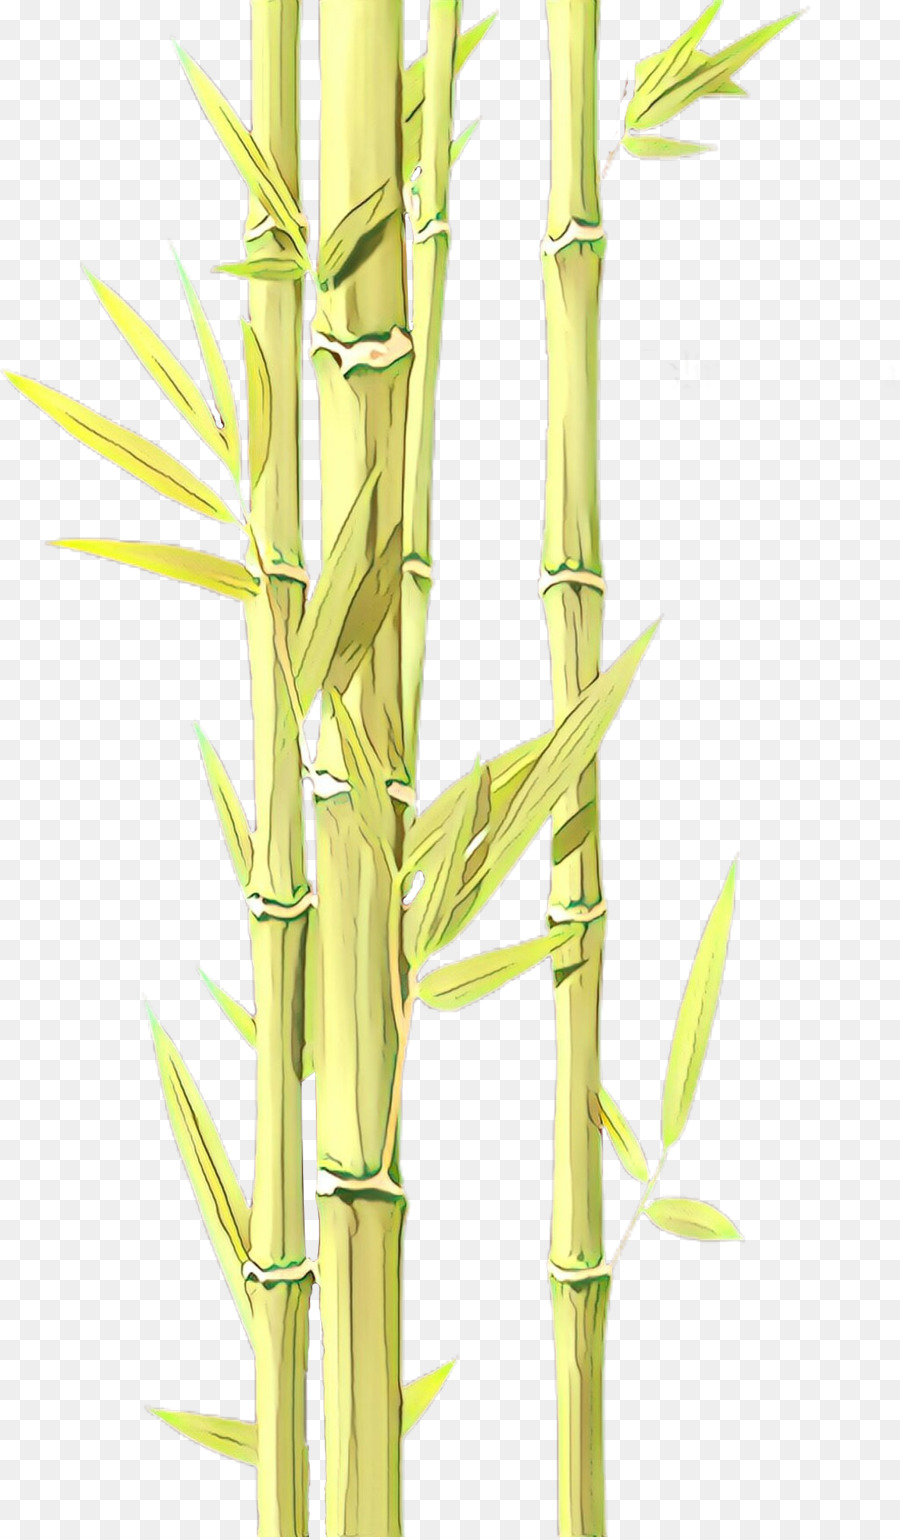 bamboo plant stem plant elymus repens grass family